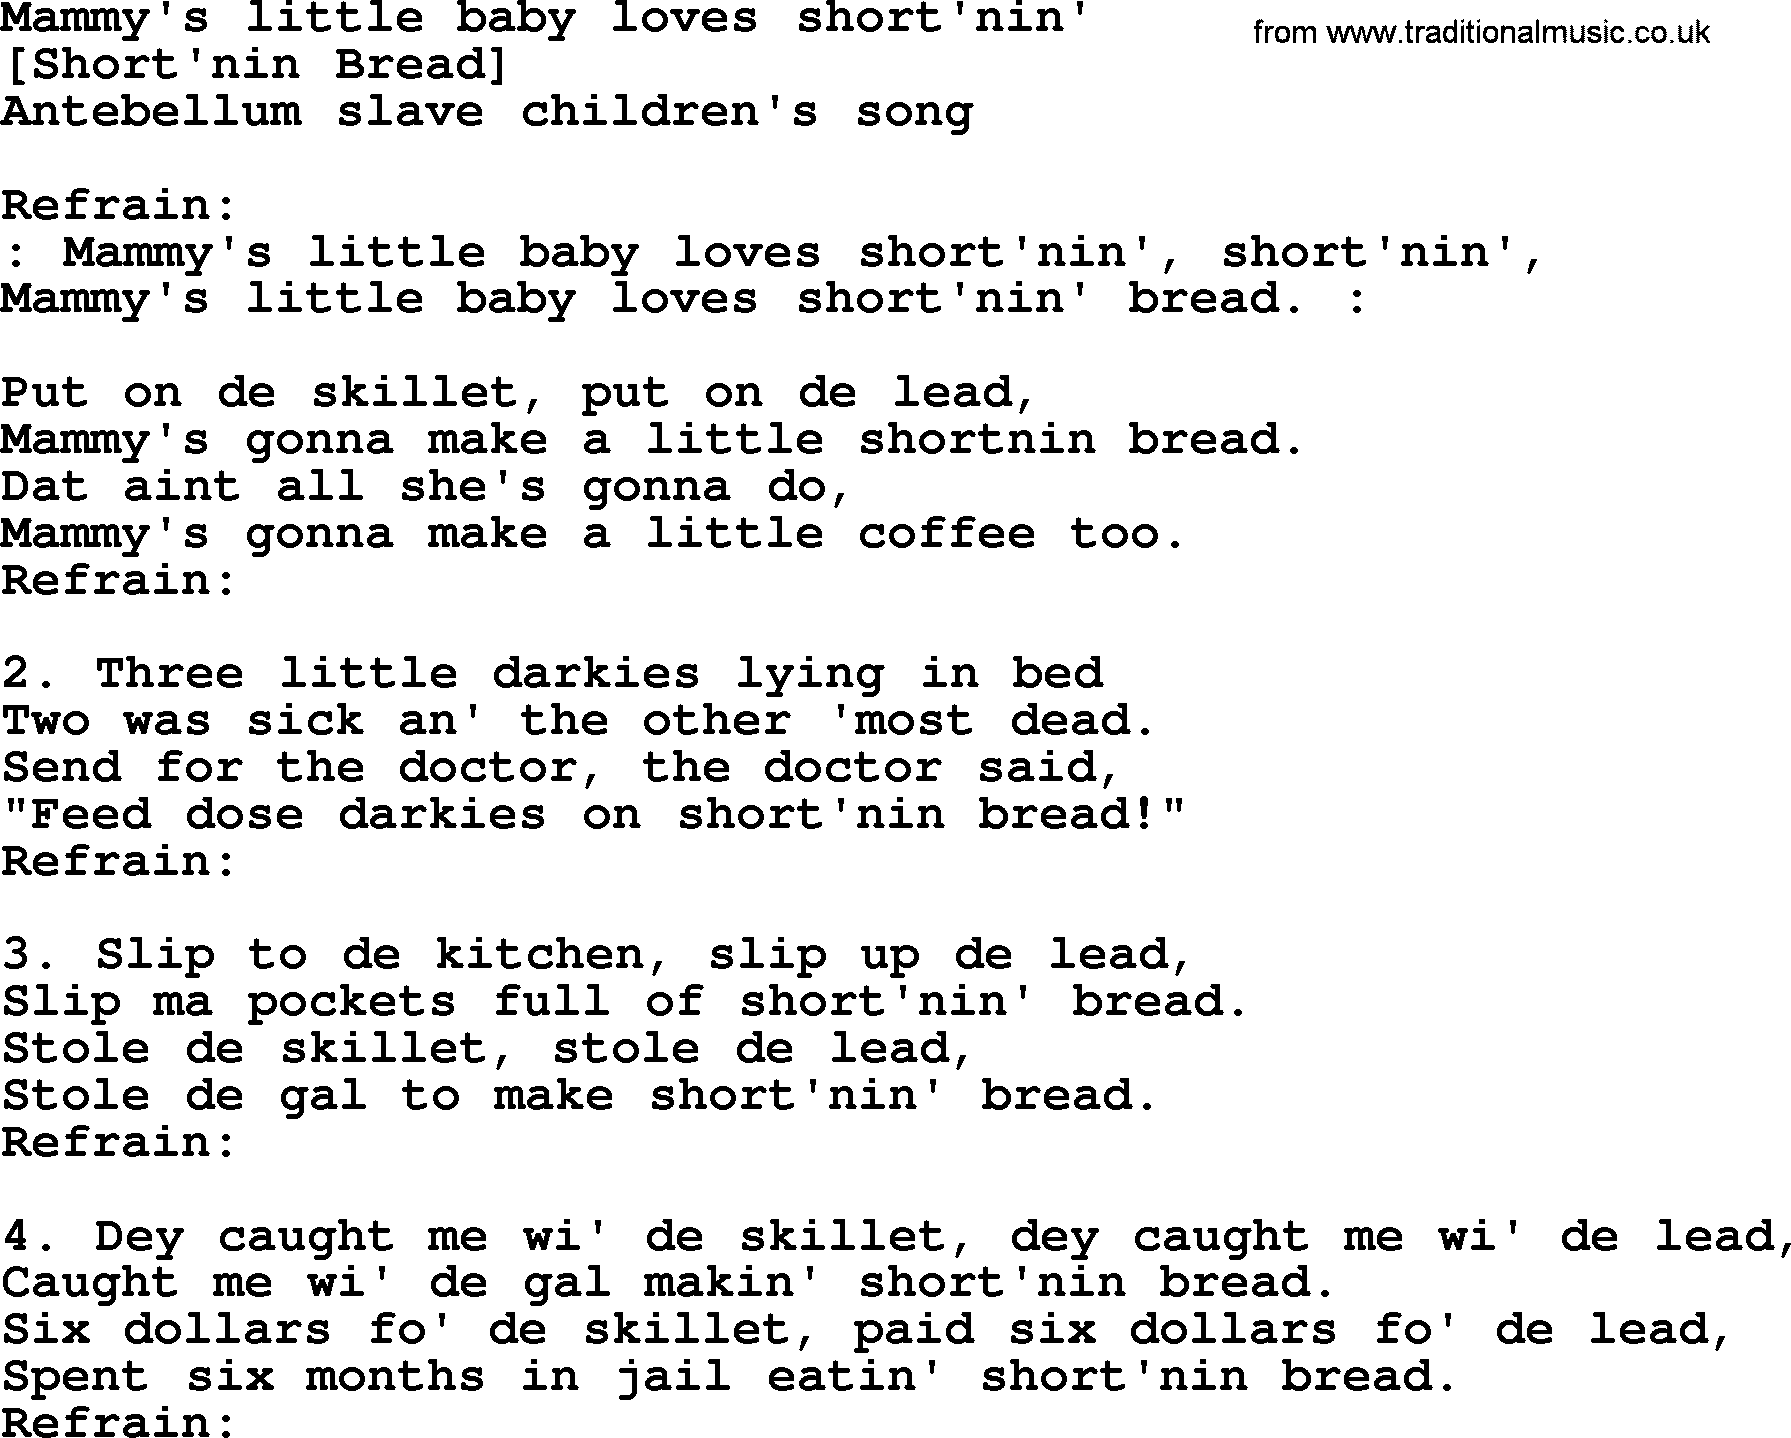 Old American Song: Mammy's Little Baby Loves Short'nin', lyrics